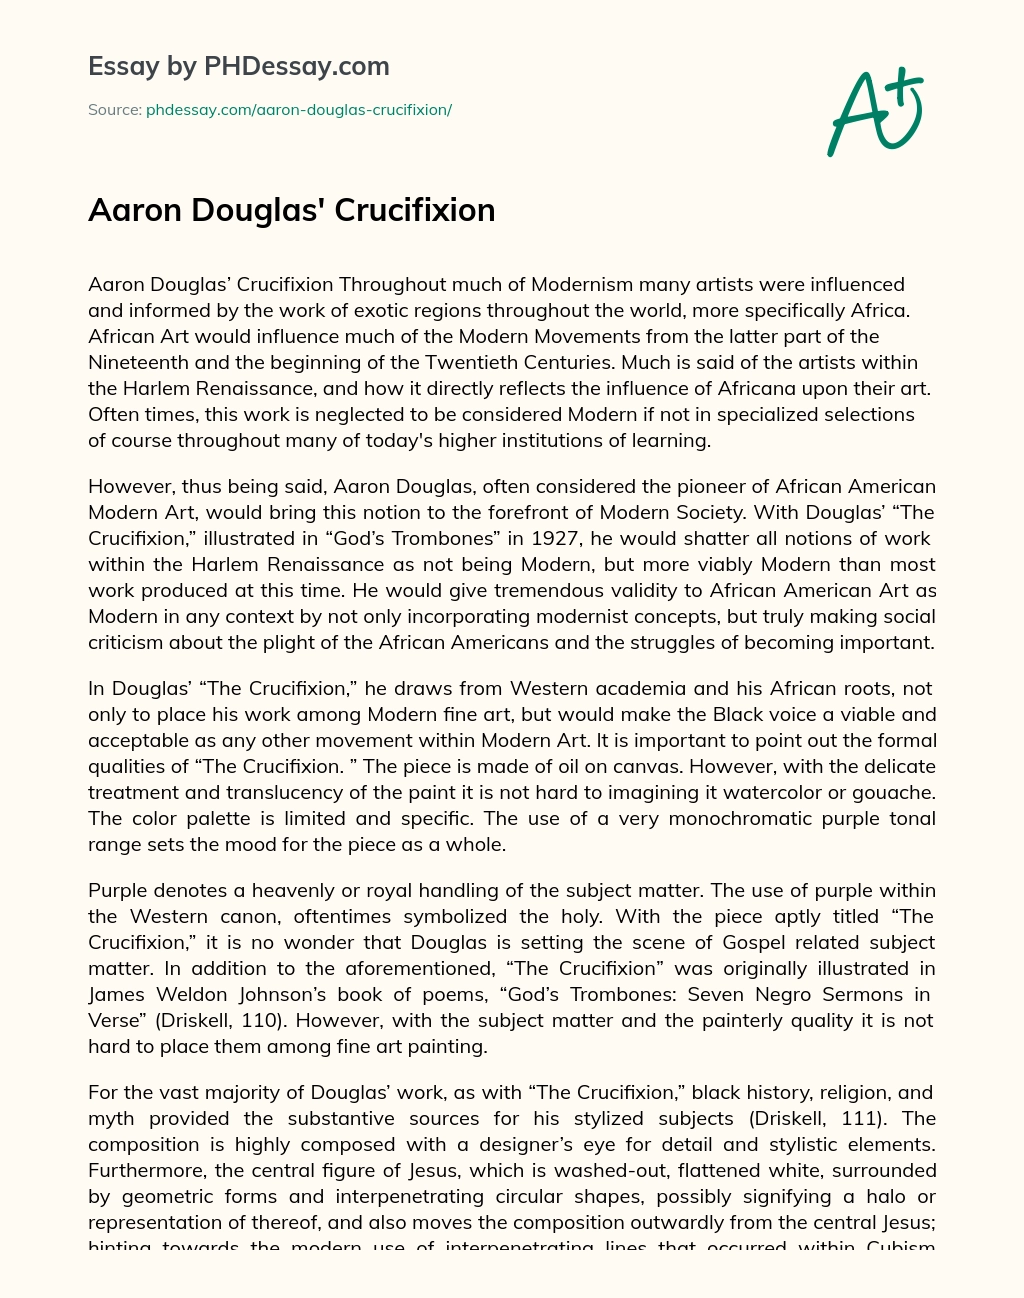 Aaron Douglas’ Crucifixion essay